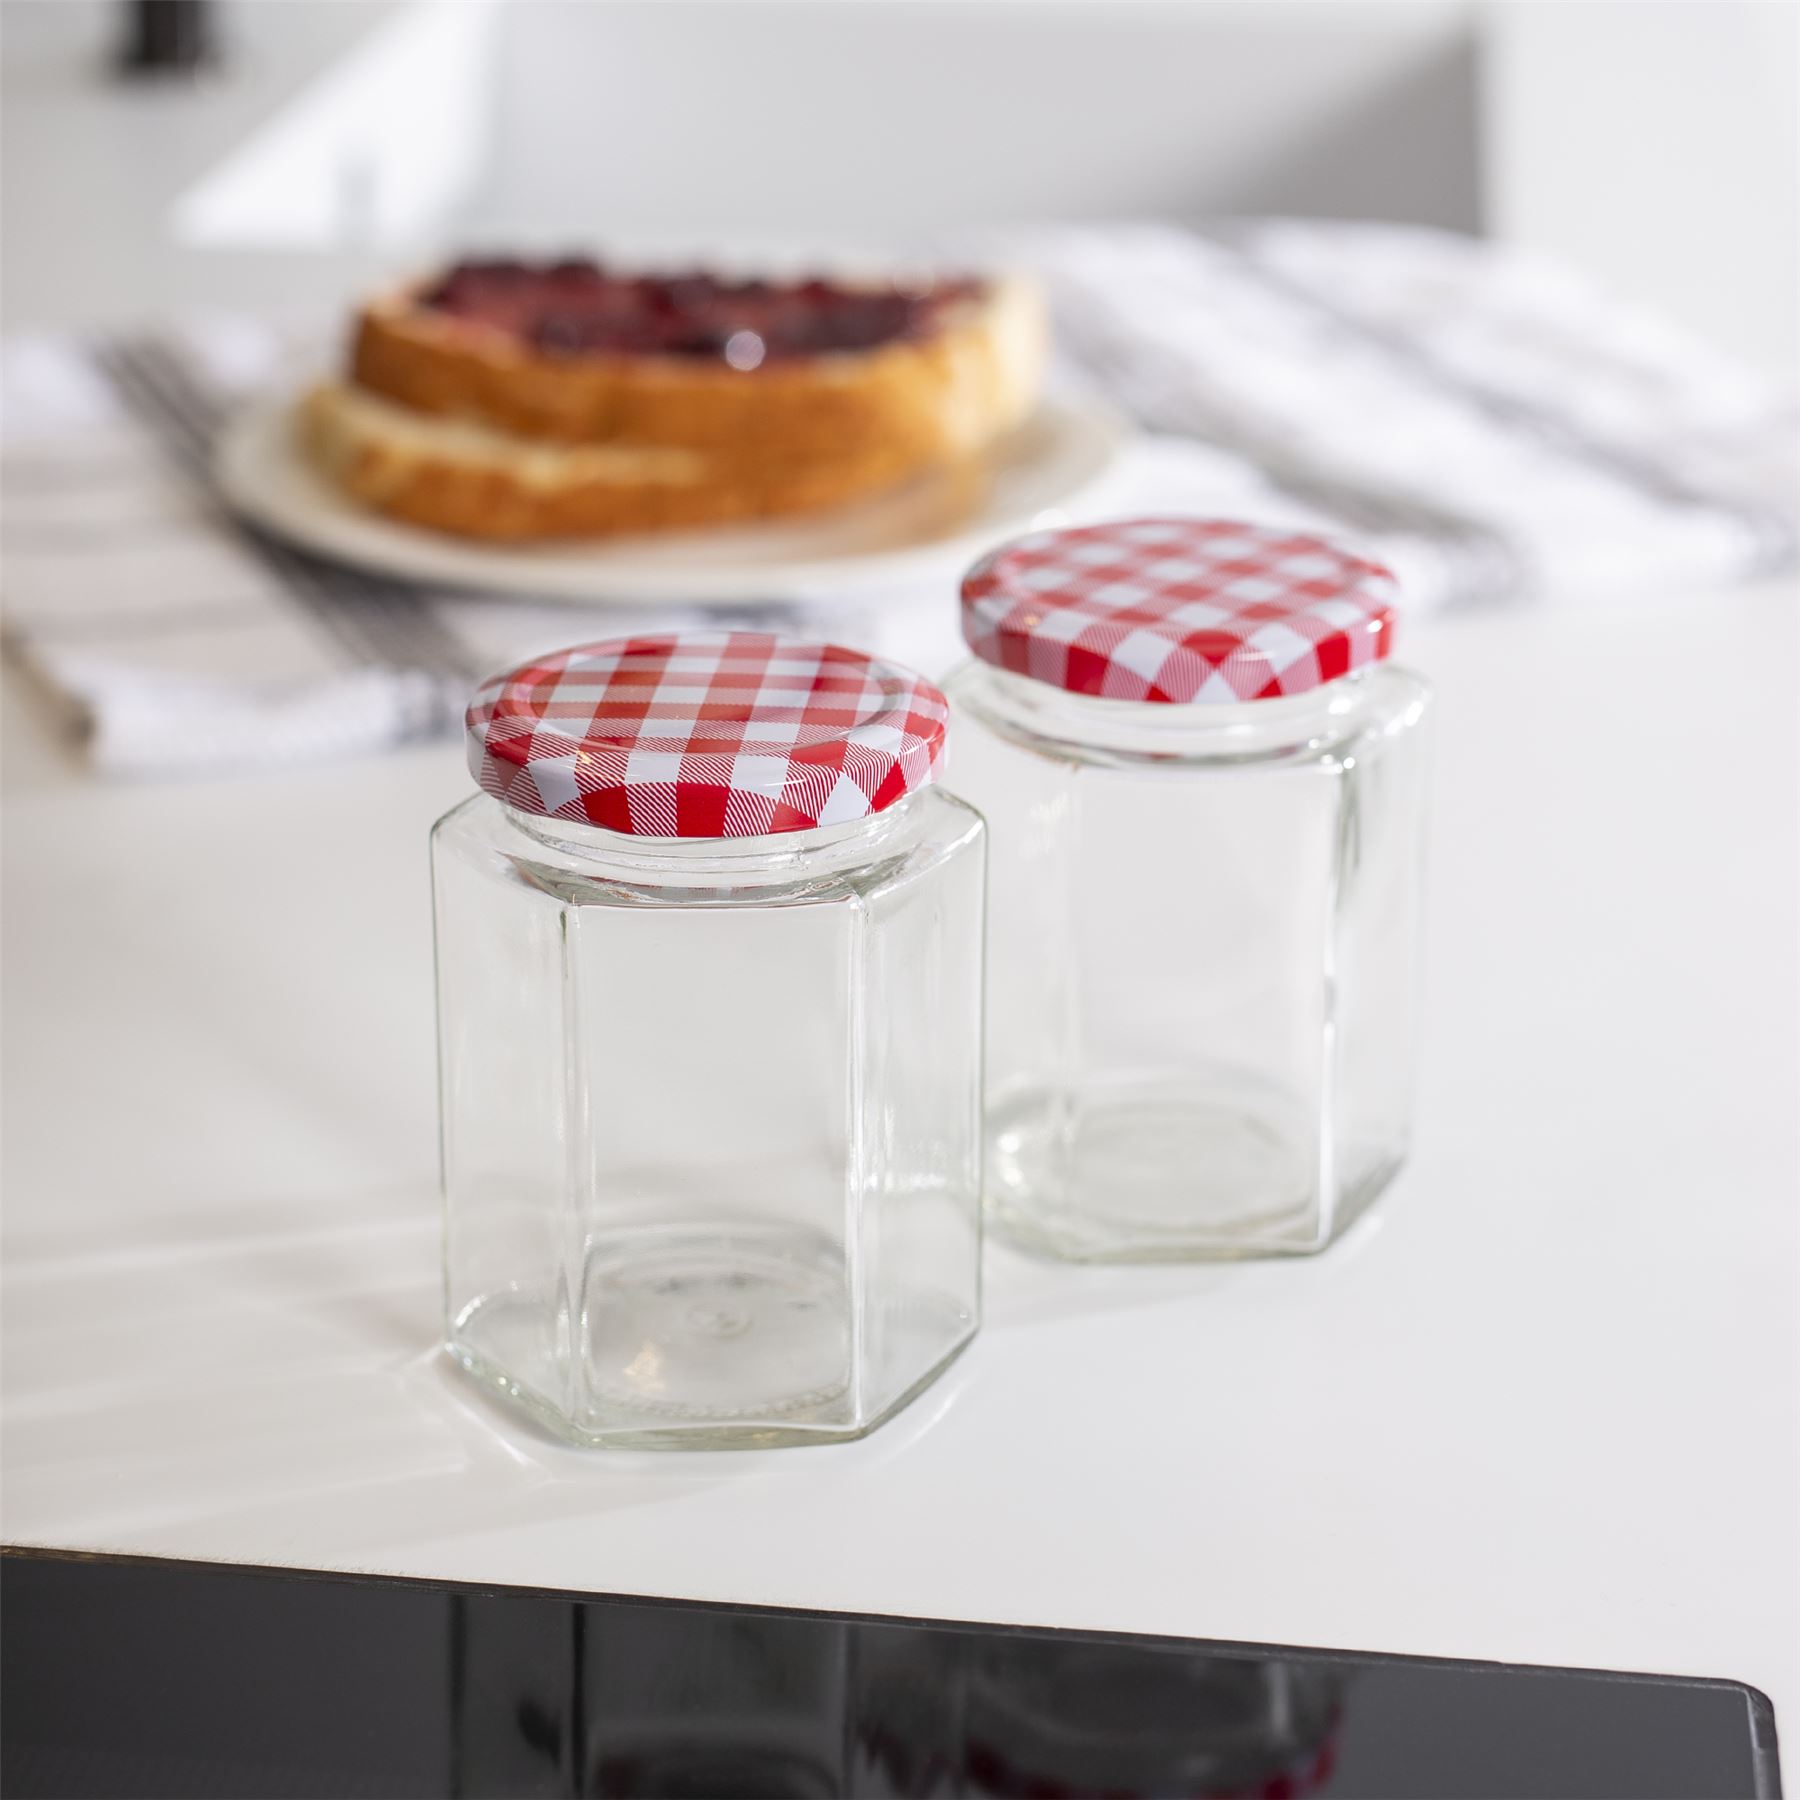 Hexagonal Mouth Glass Jam Jars - Set of 24 | M&W